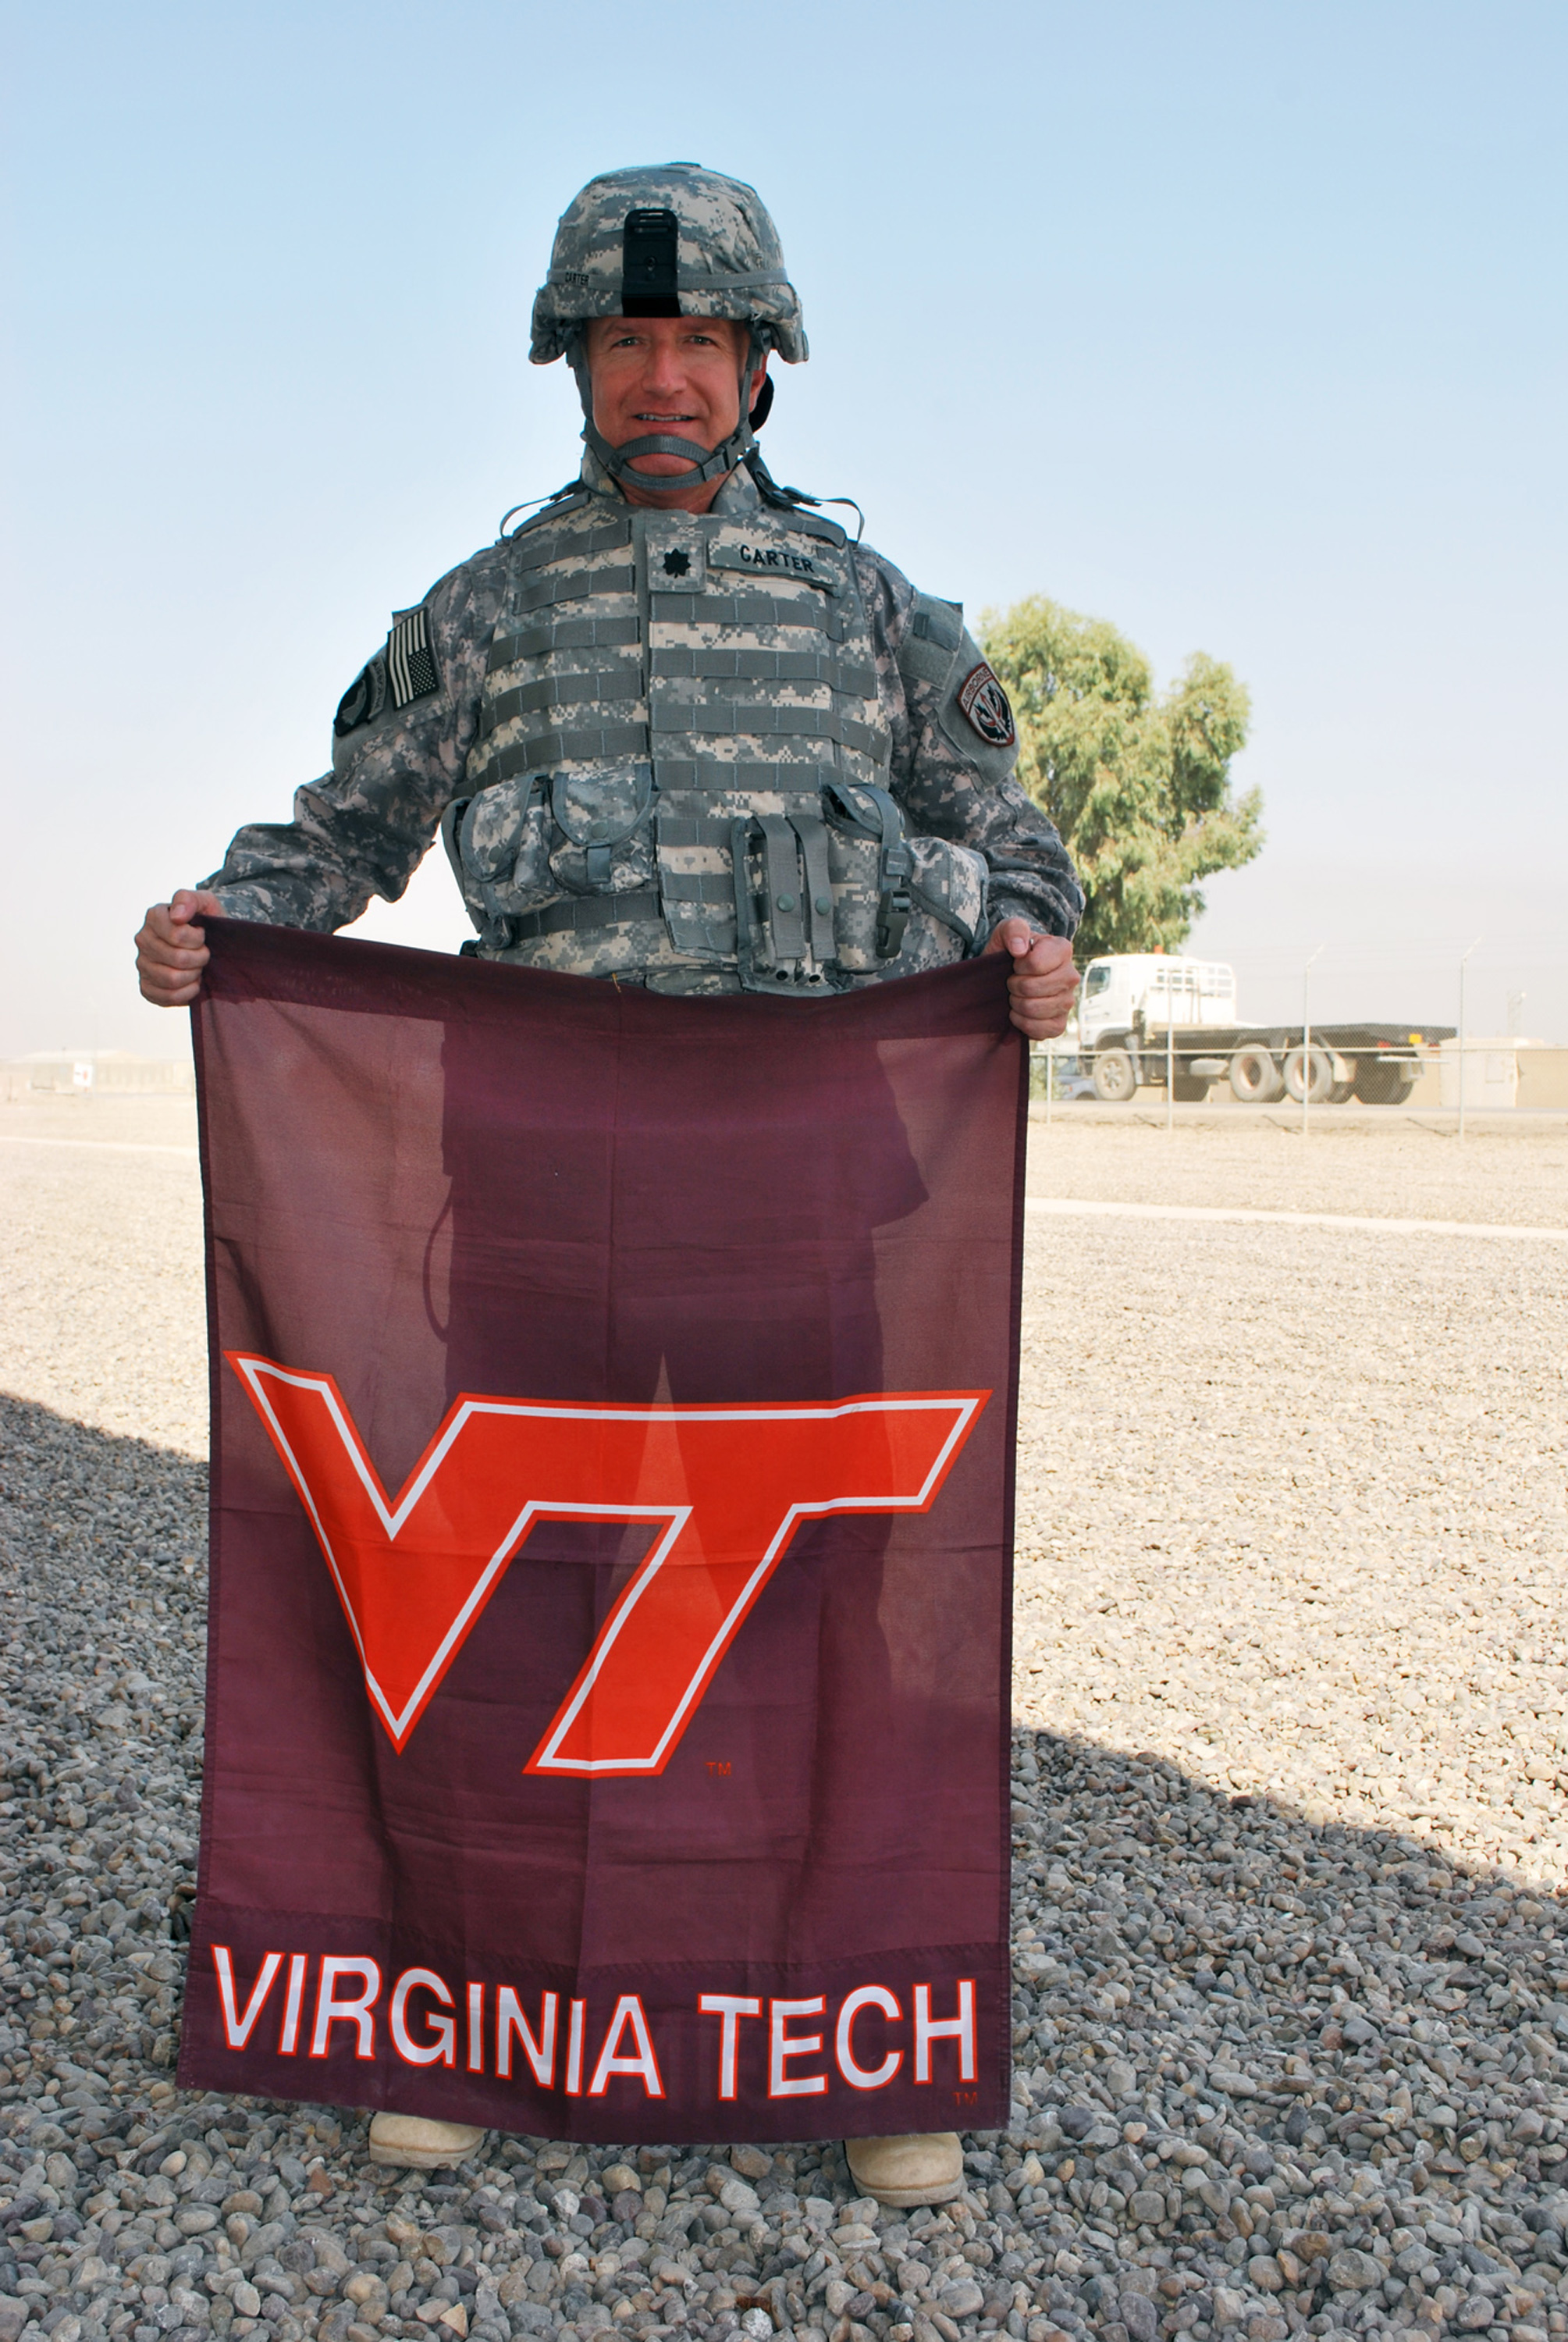 Lt. Col. Steven Carter, U.S. Army, Virginia Tech Corps of Cadets Class of 1989